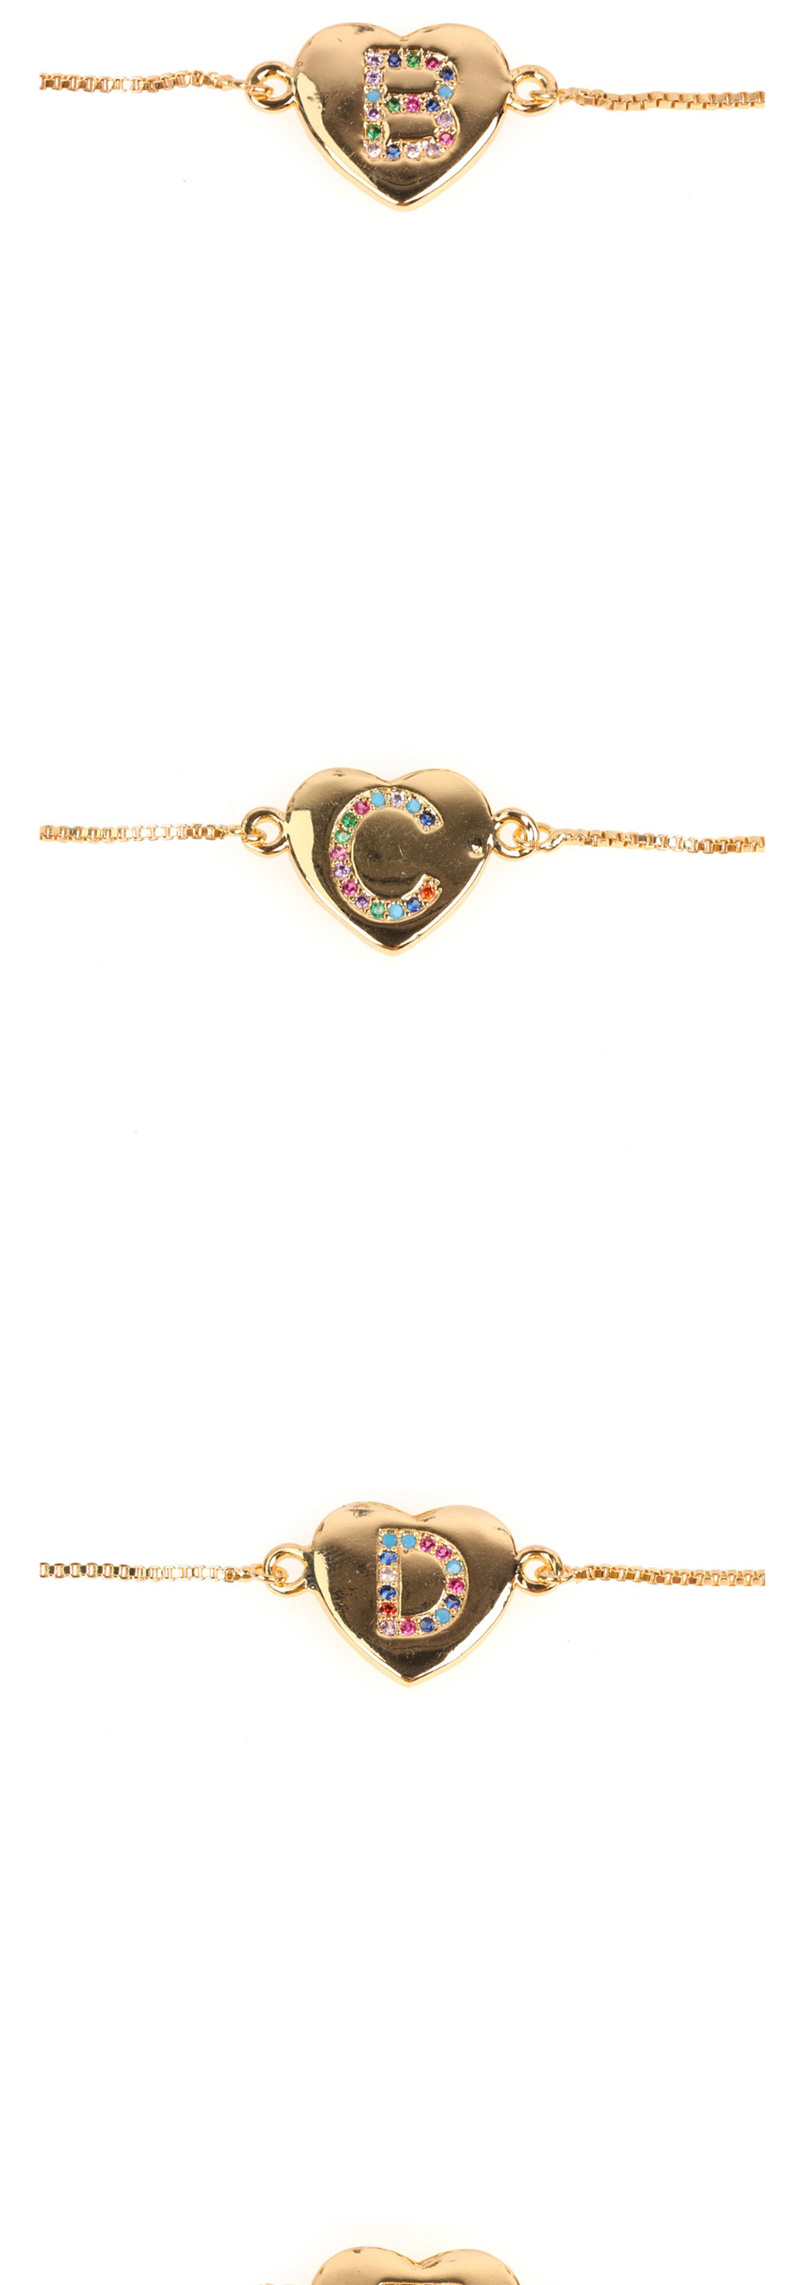 Fashion P Golden Heart Bracelet With Diamonds And Letters,Bracelets